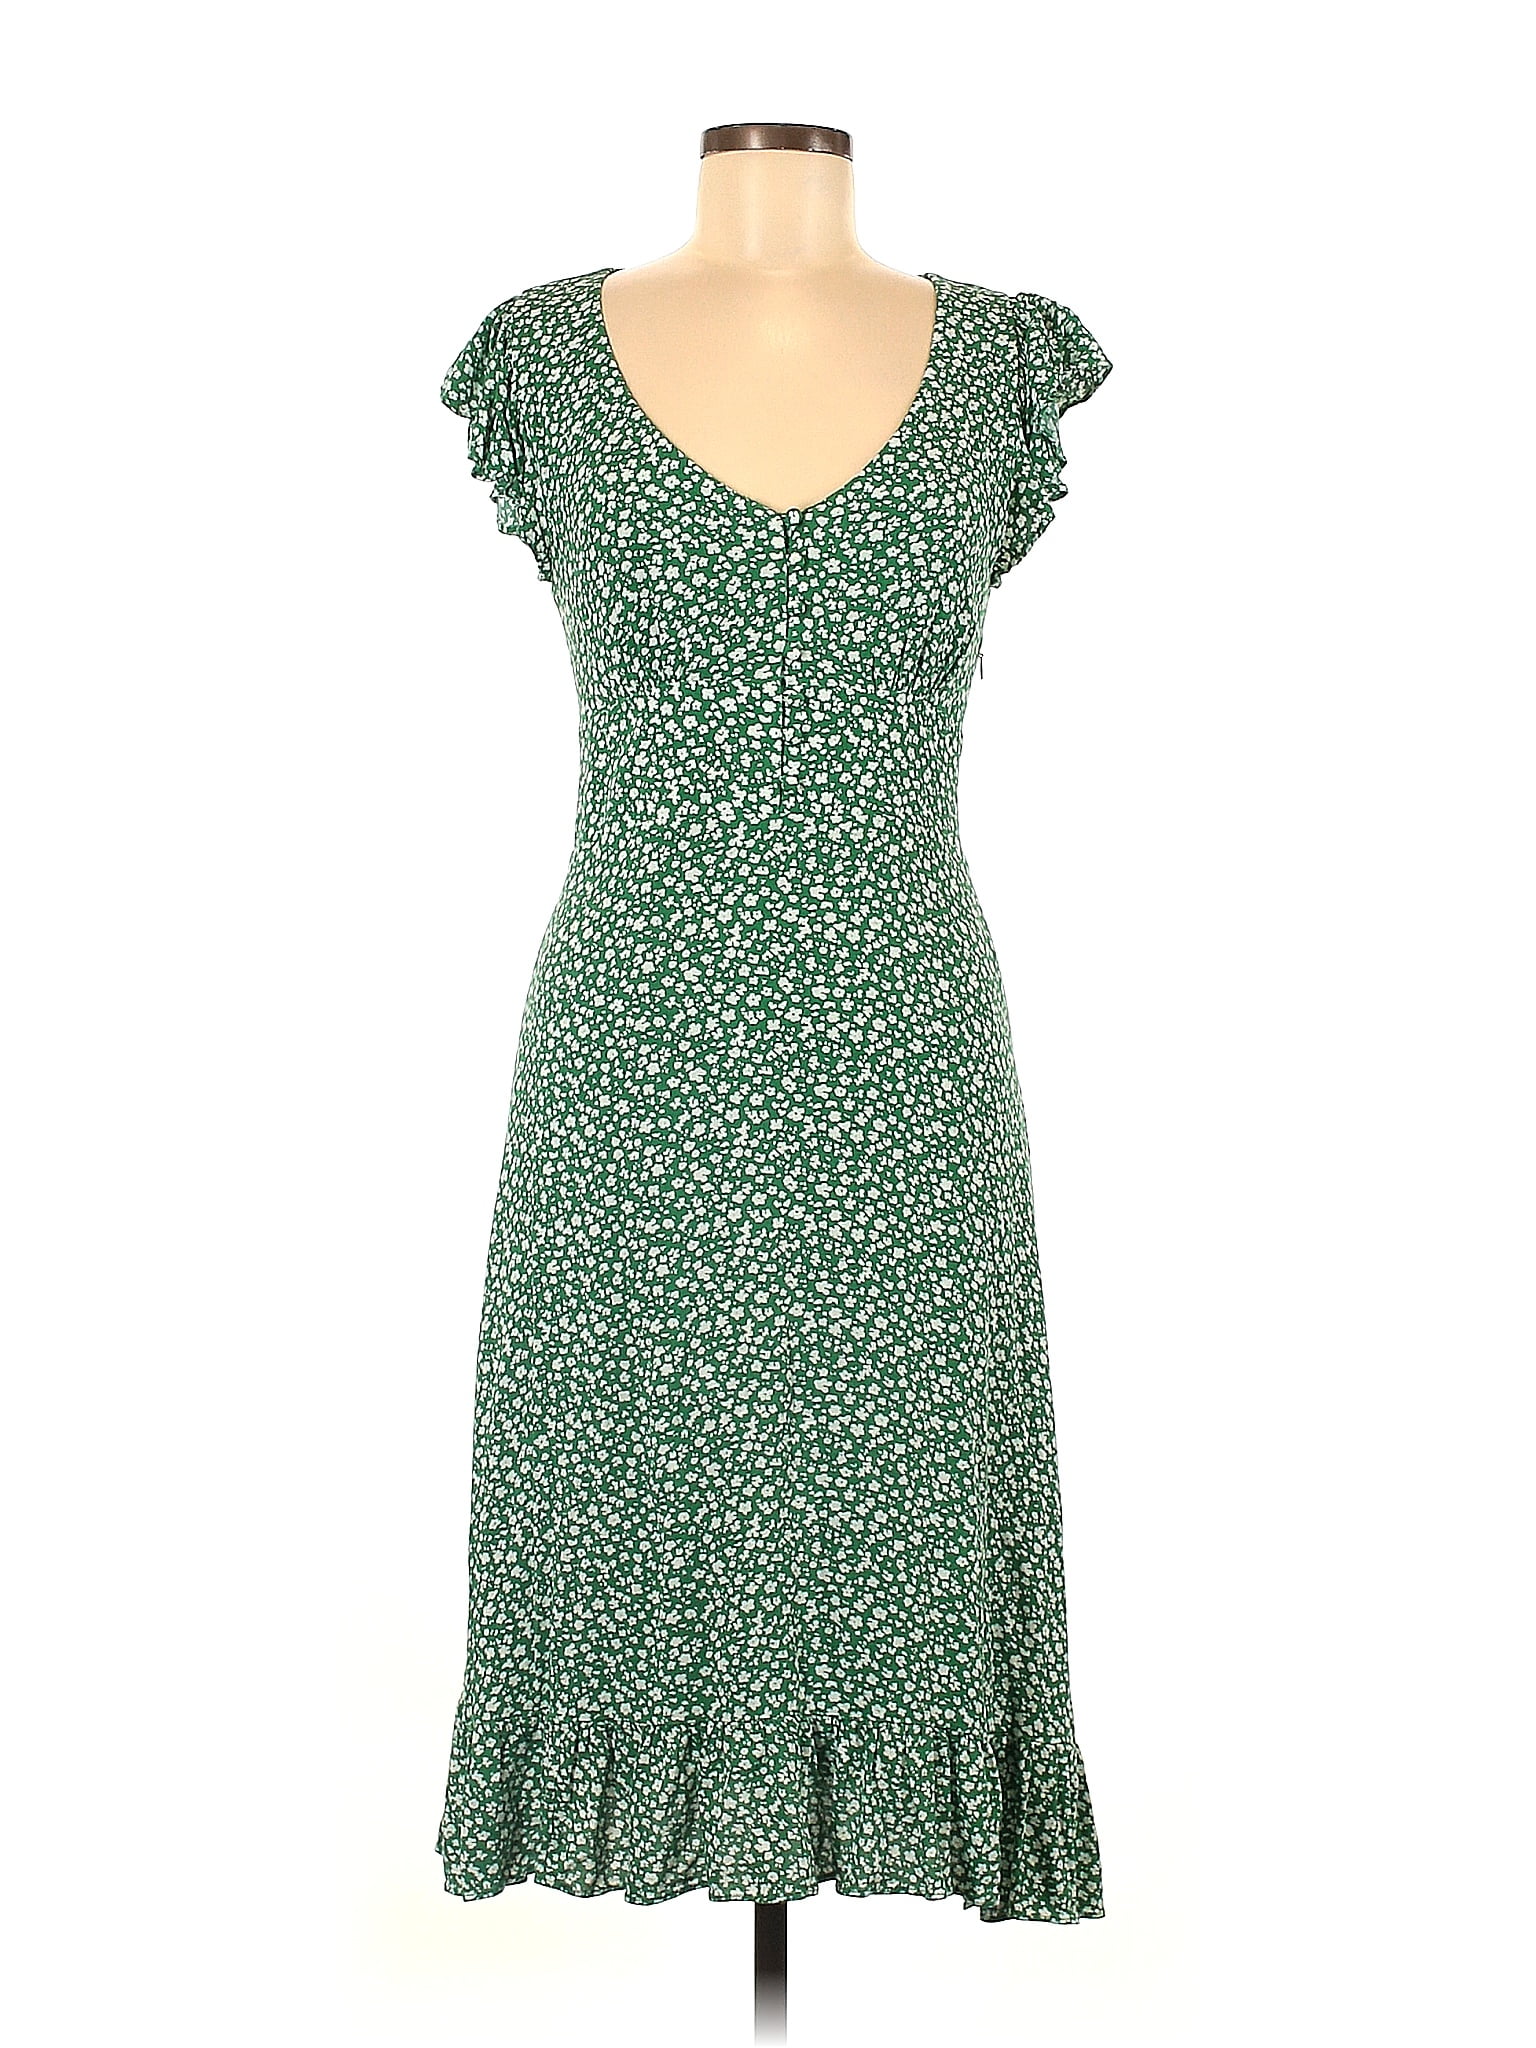 Banana Republic 100% Rayon Green Casual Dress Size 6 - 73% off | thredUP